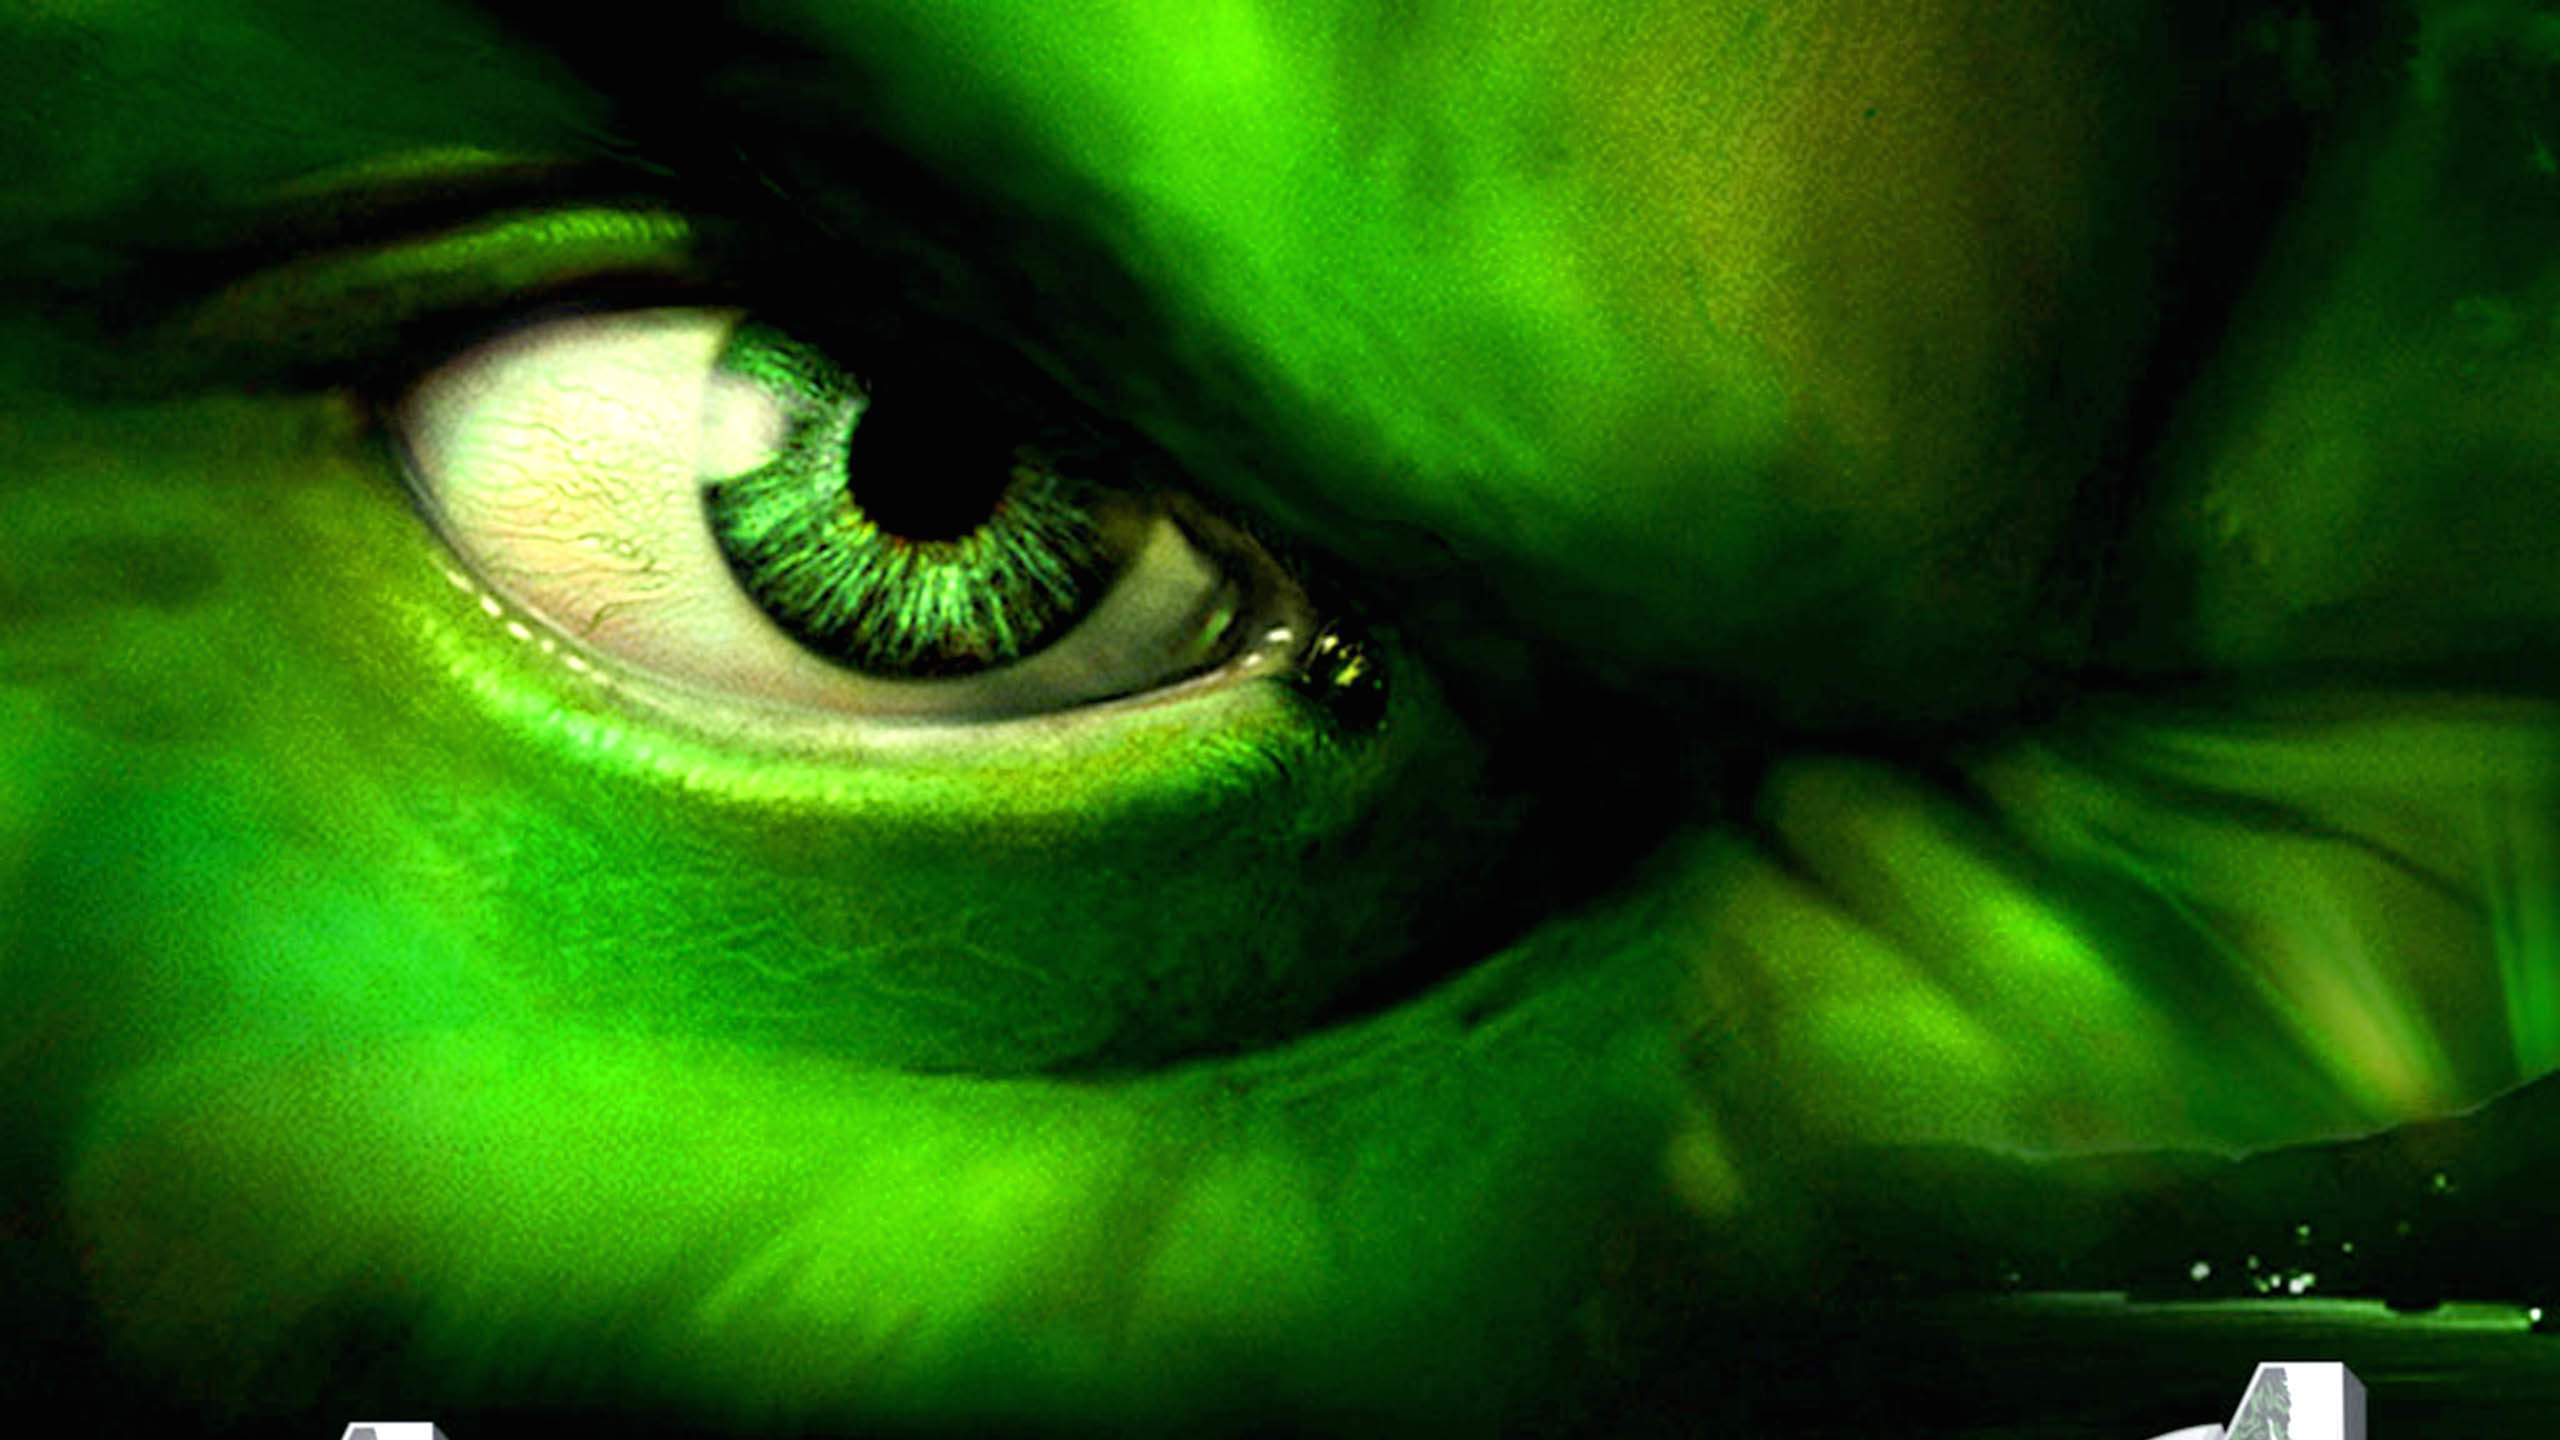 hulk live wallpaper,green,eye,close up,organ,iris